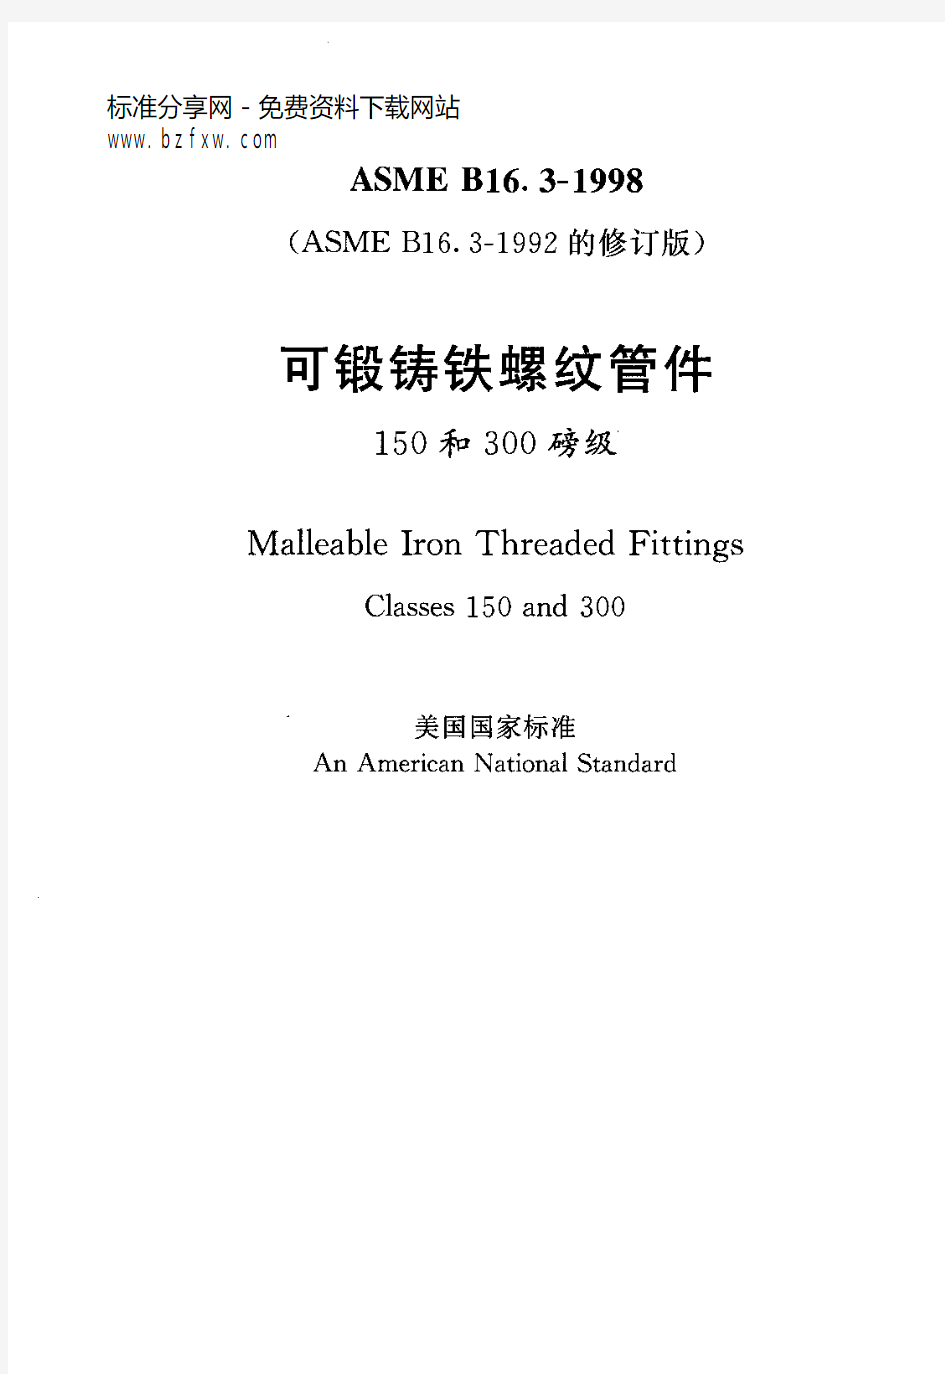 ASME B16.3-1998 中文版 可锻铸铁螺纹管件(150和300磅级)